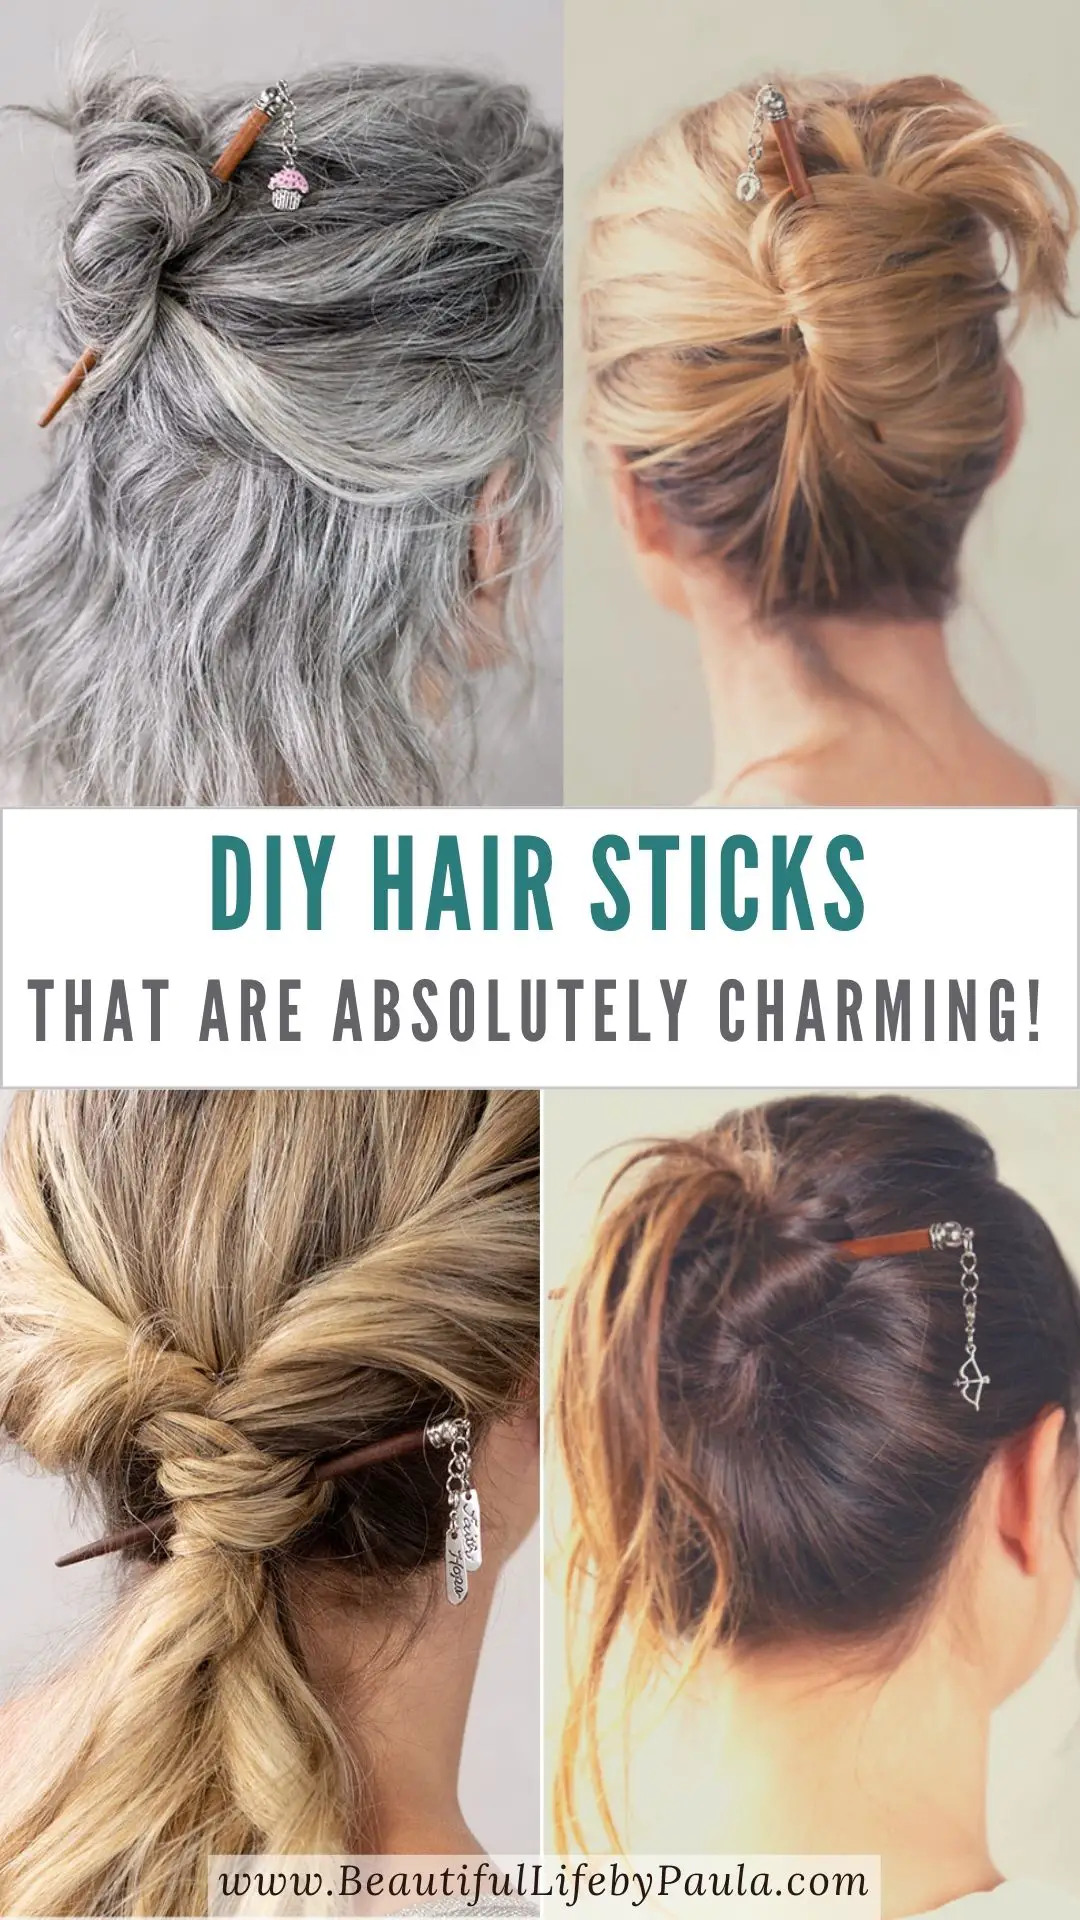 DIY hair sticks charms